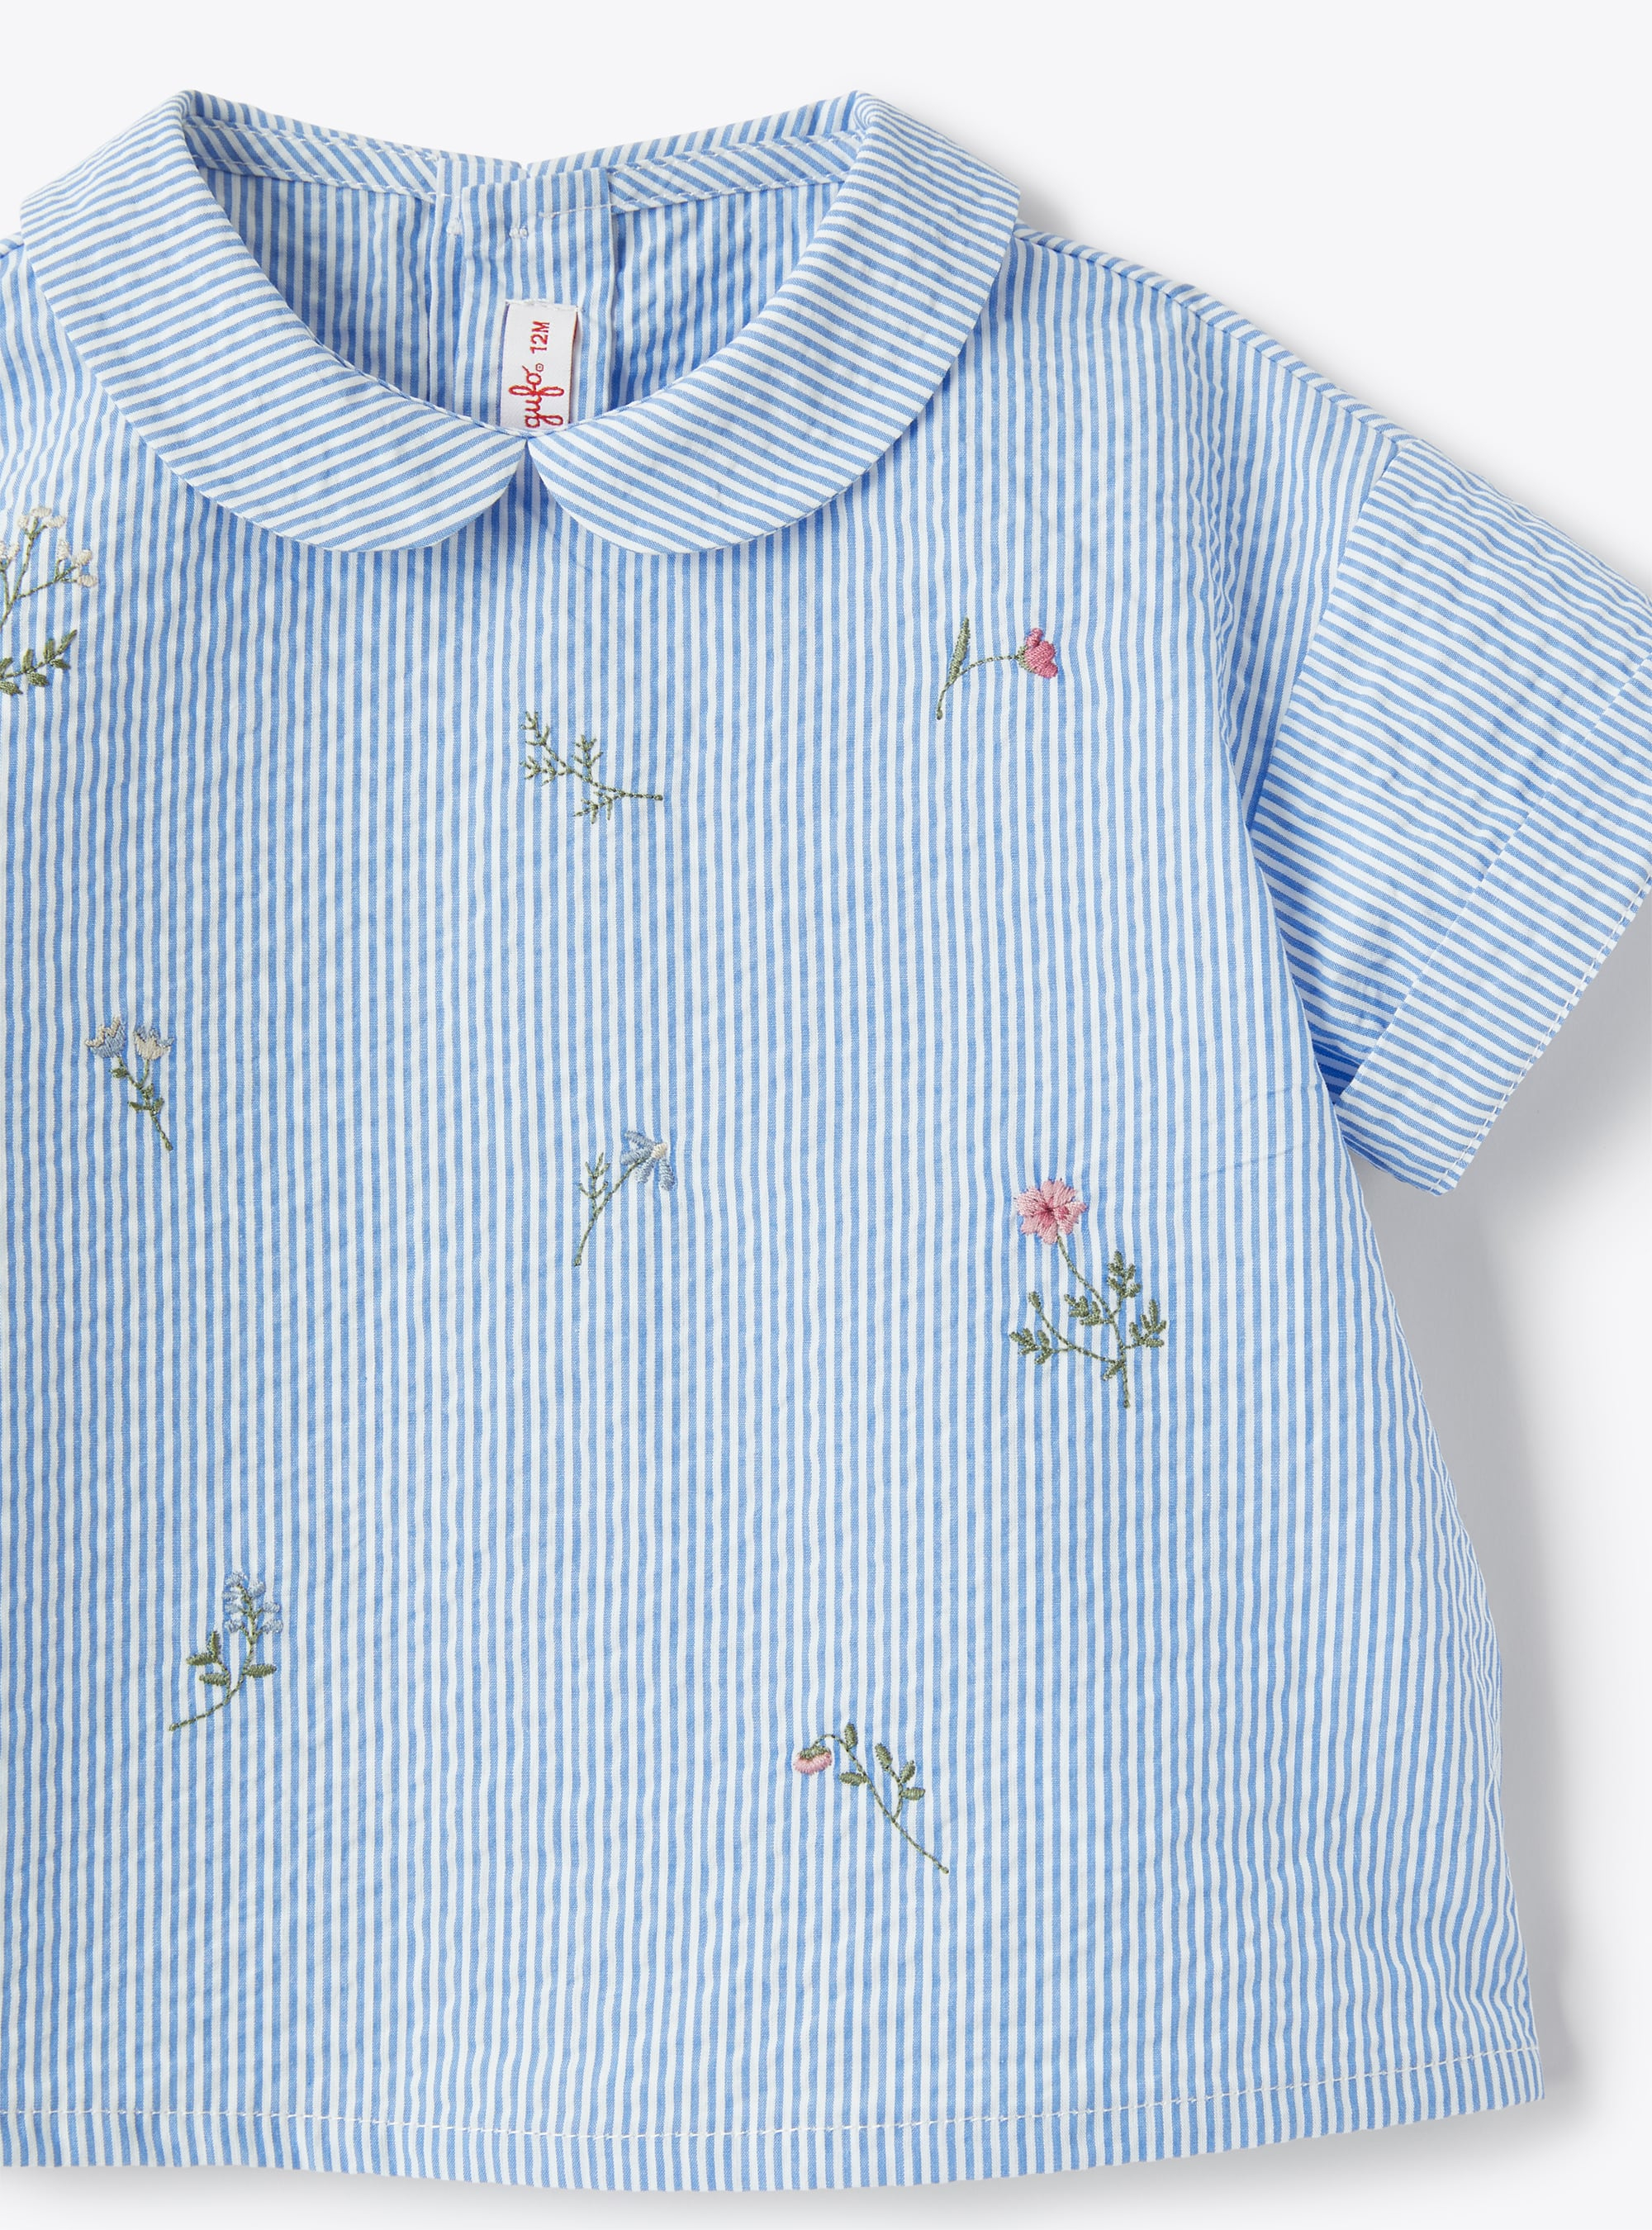 Seersucker shirt with embroidered floral details - Brown | Il Gufo